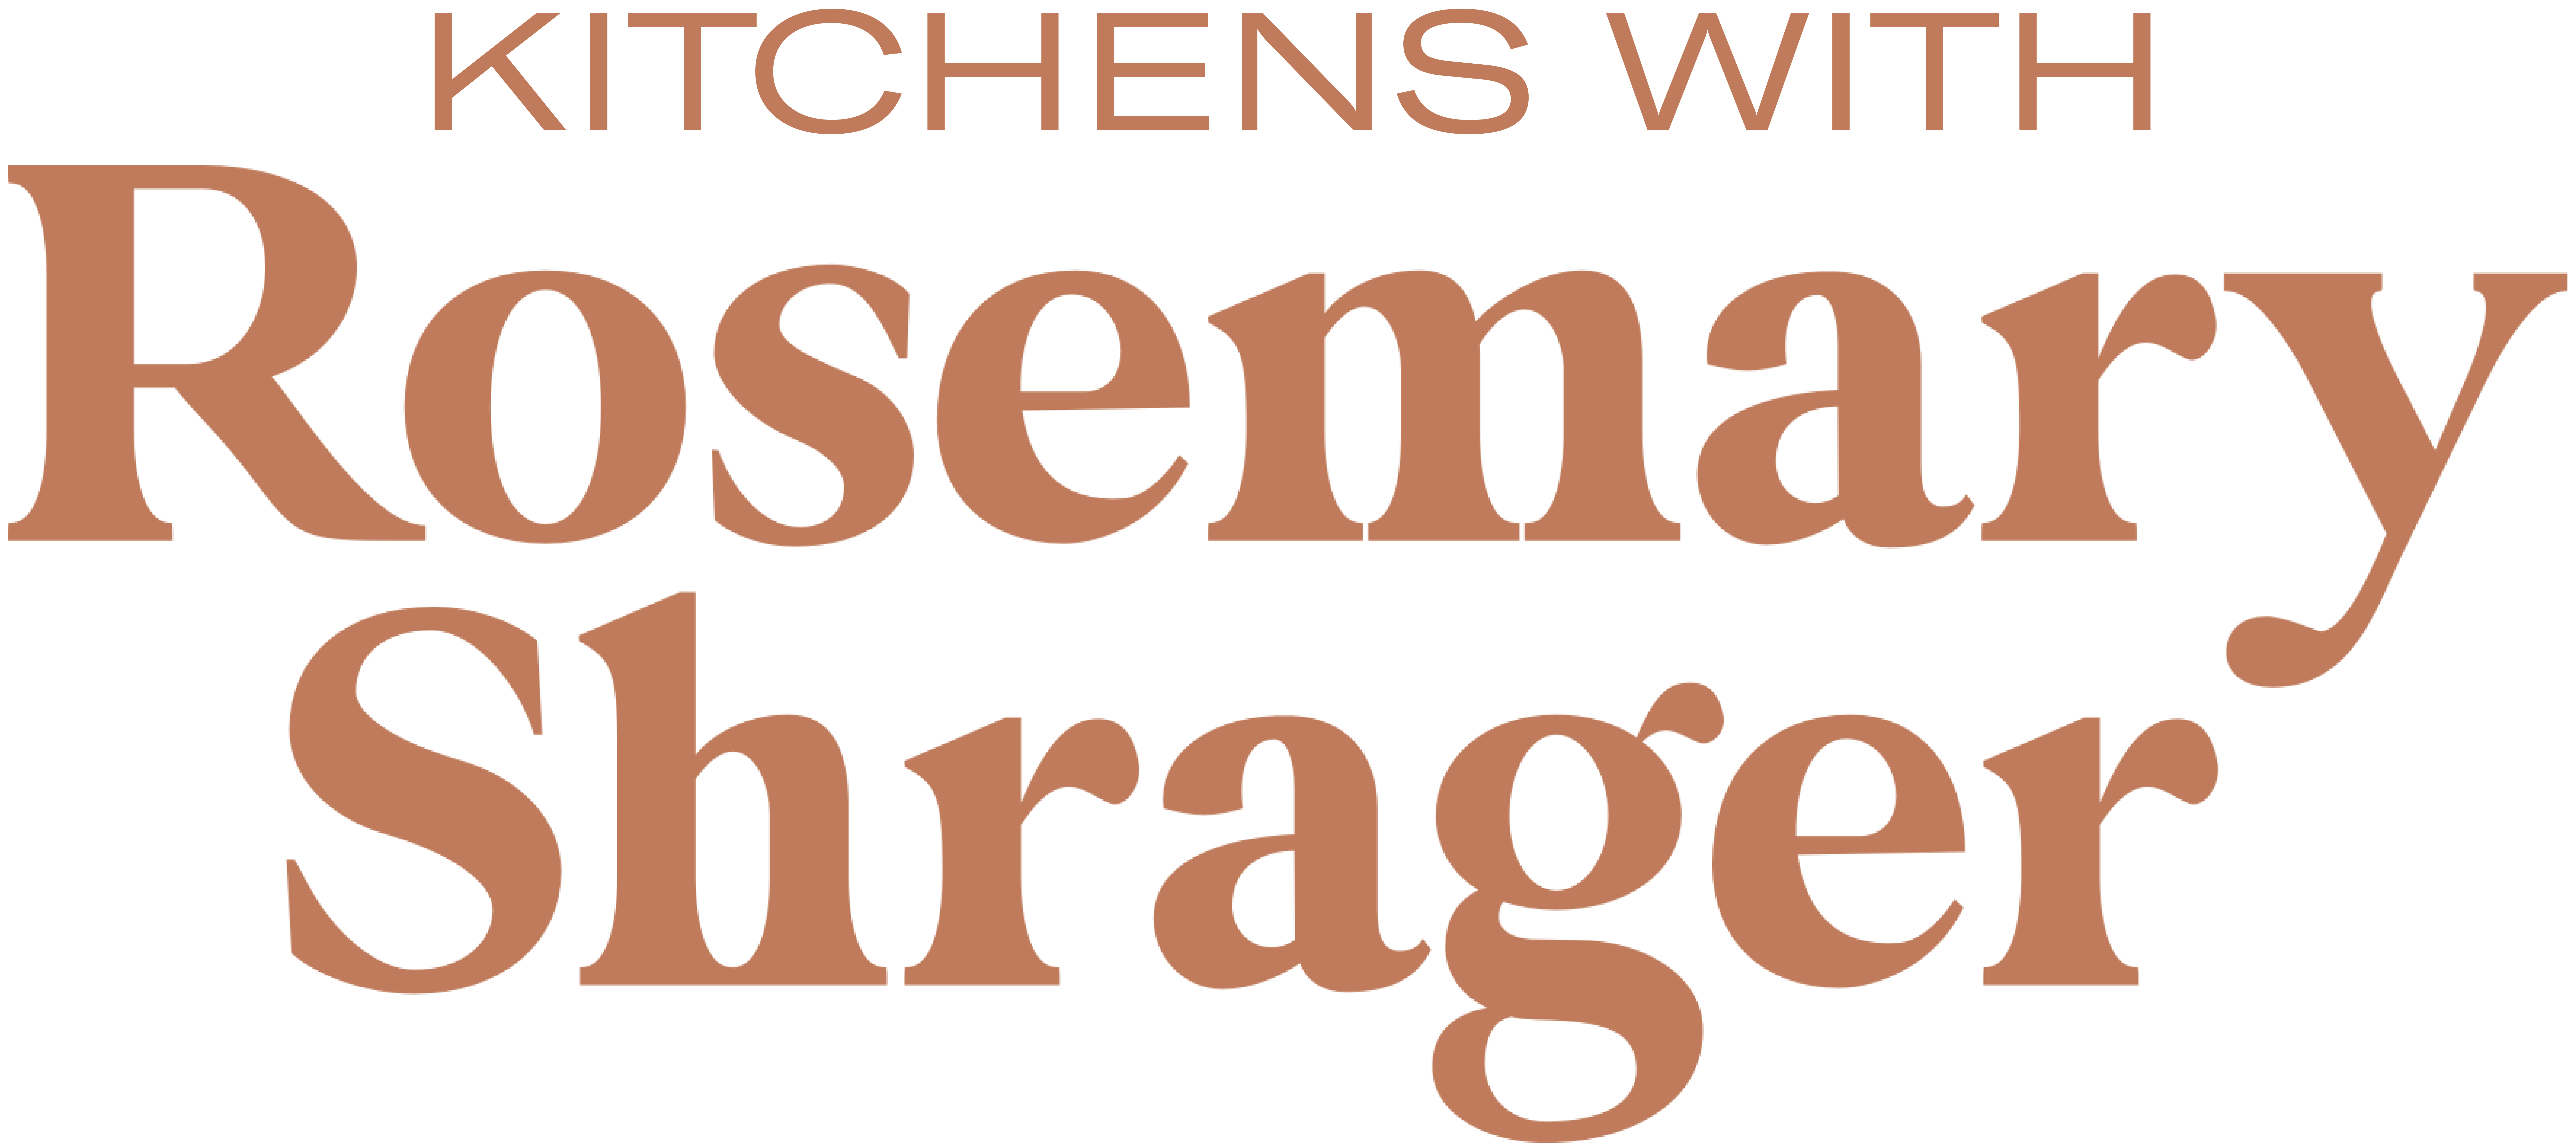 kitchens with rosemary shrager logo